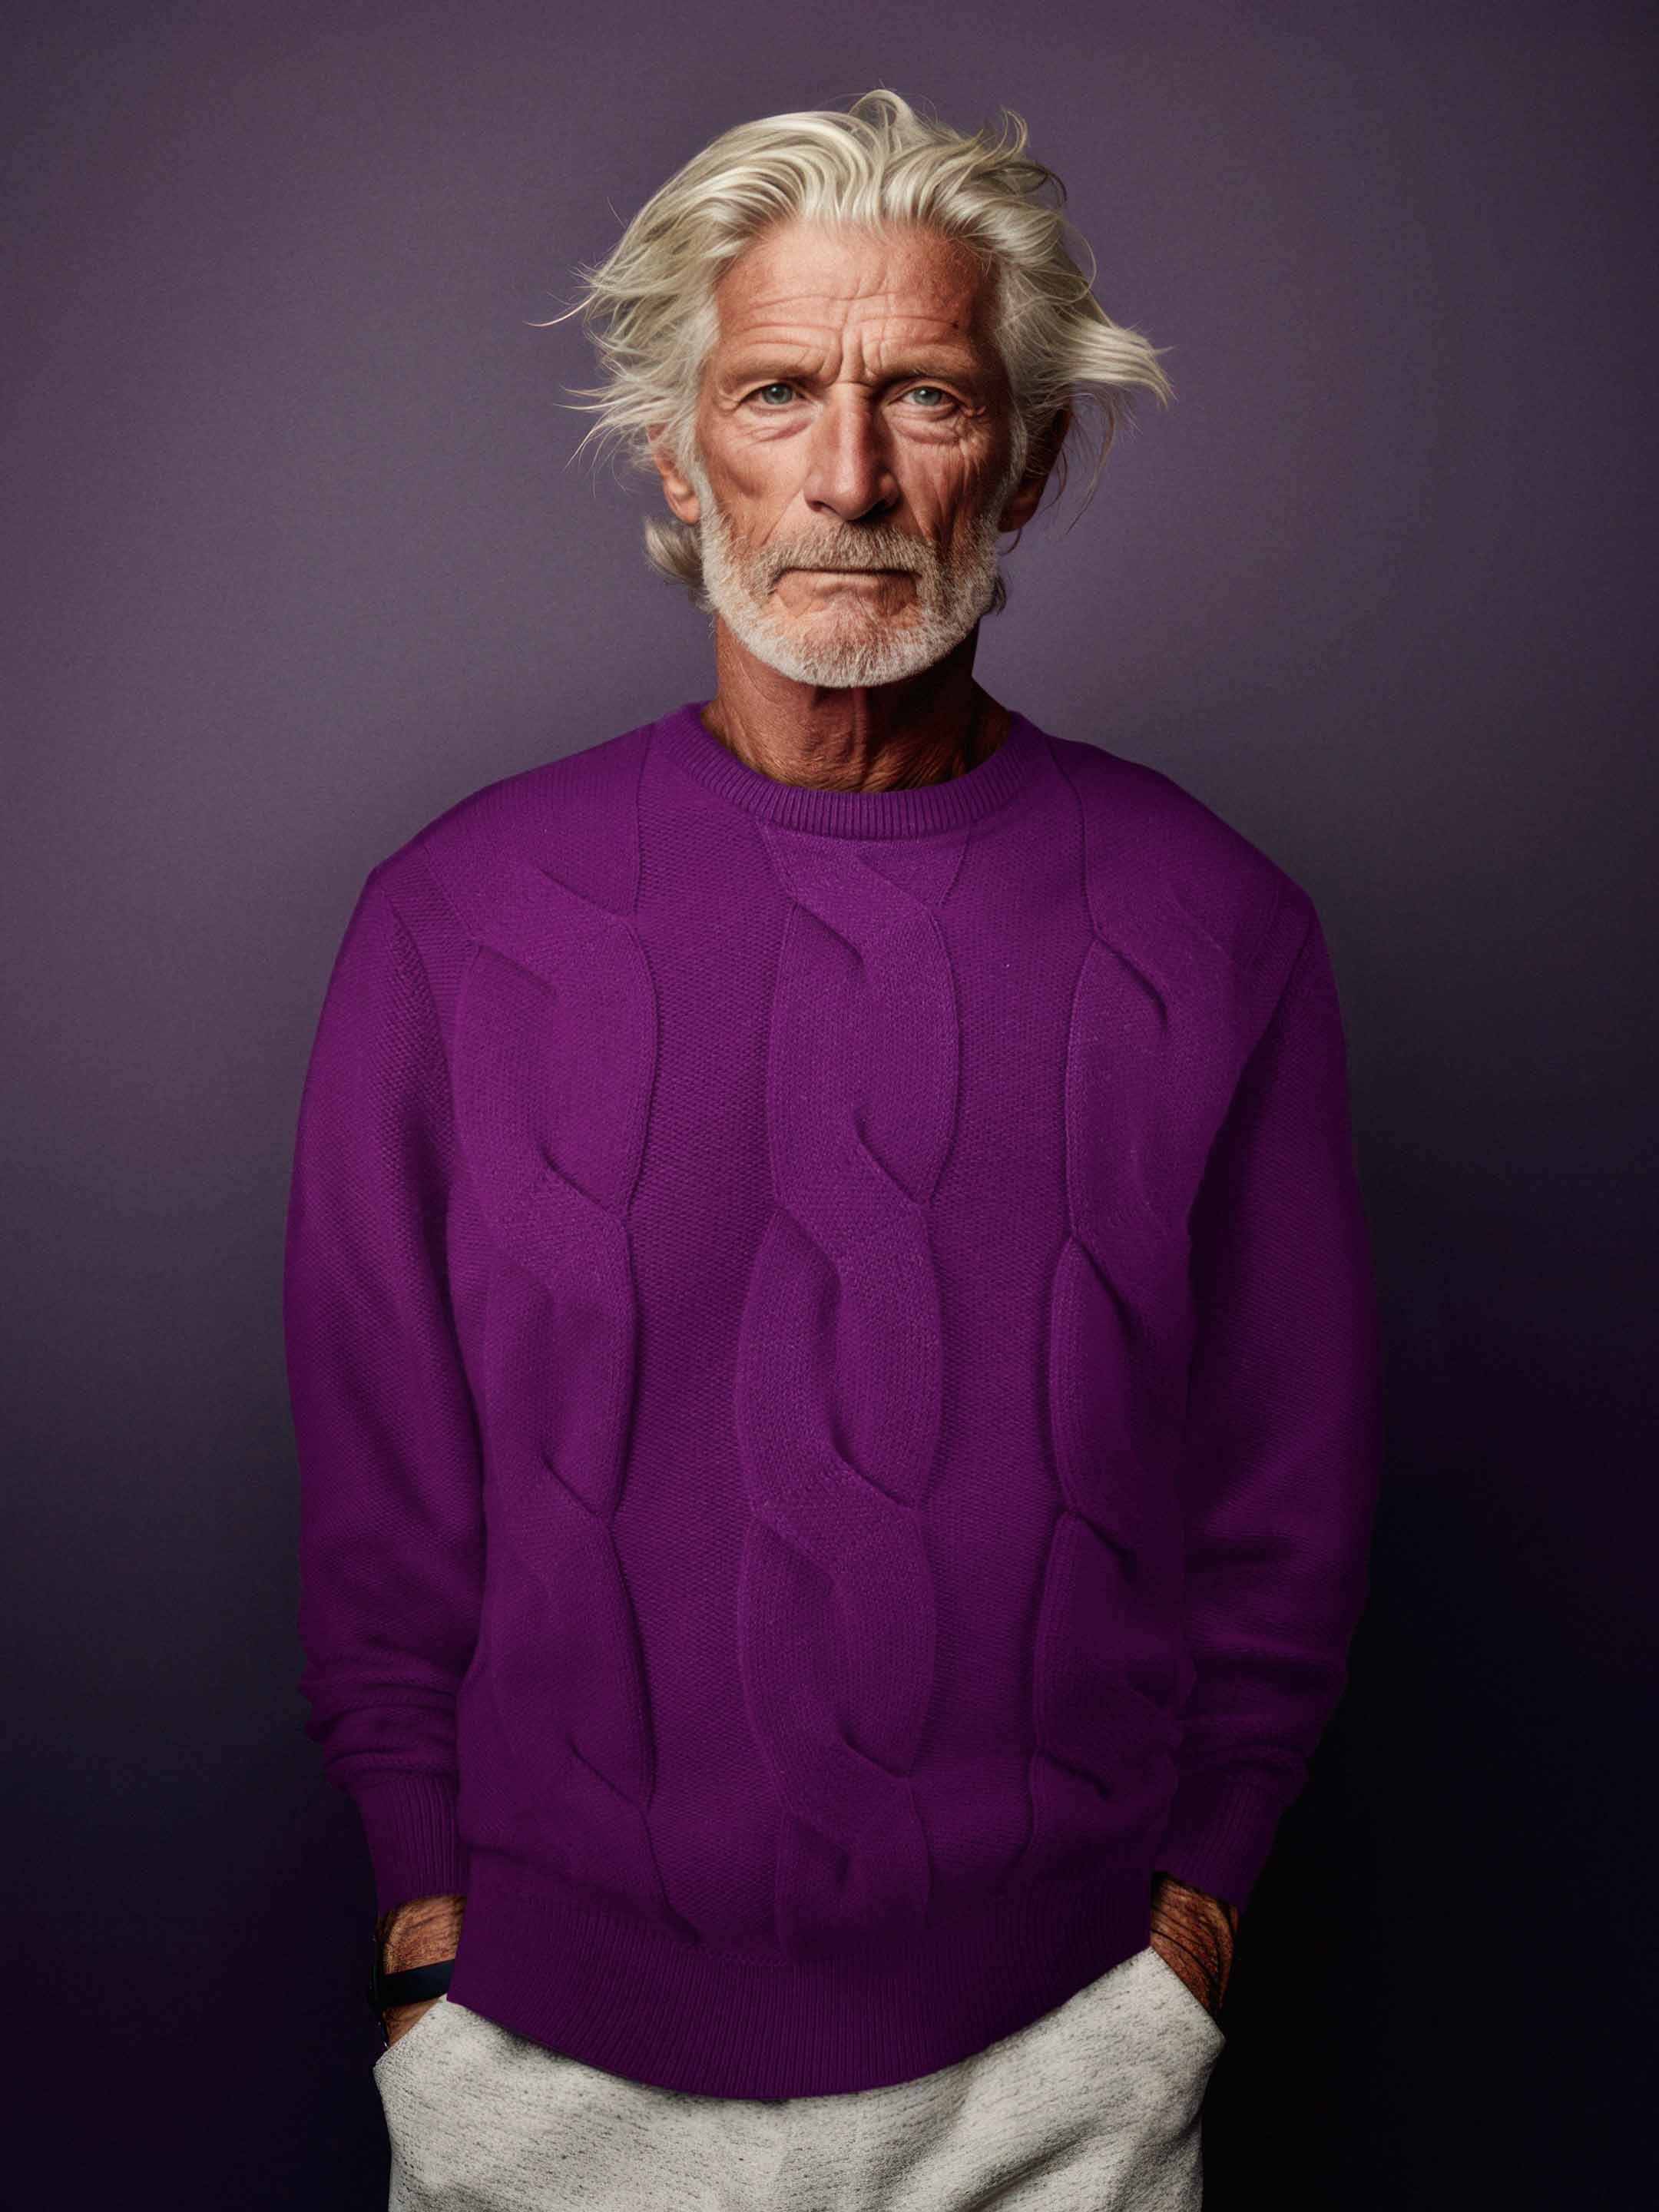 Royal Purple Knitted Crewneck Jumper - Men's/Women's - Sheep Inc